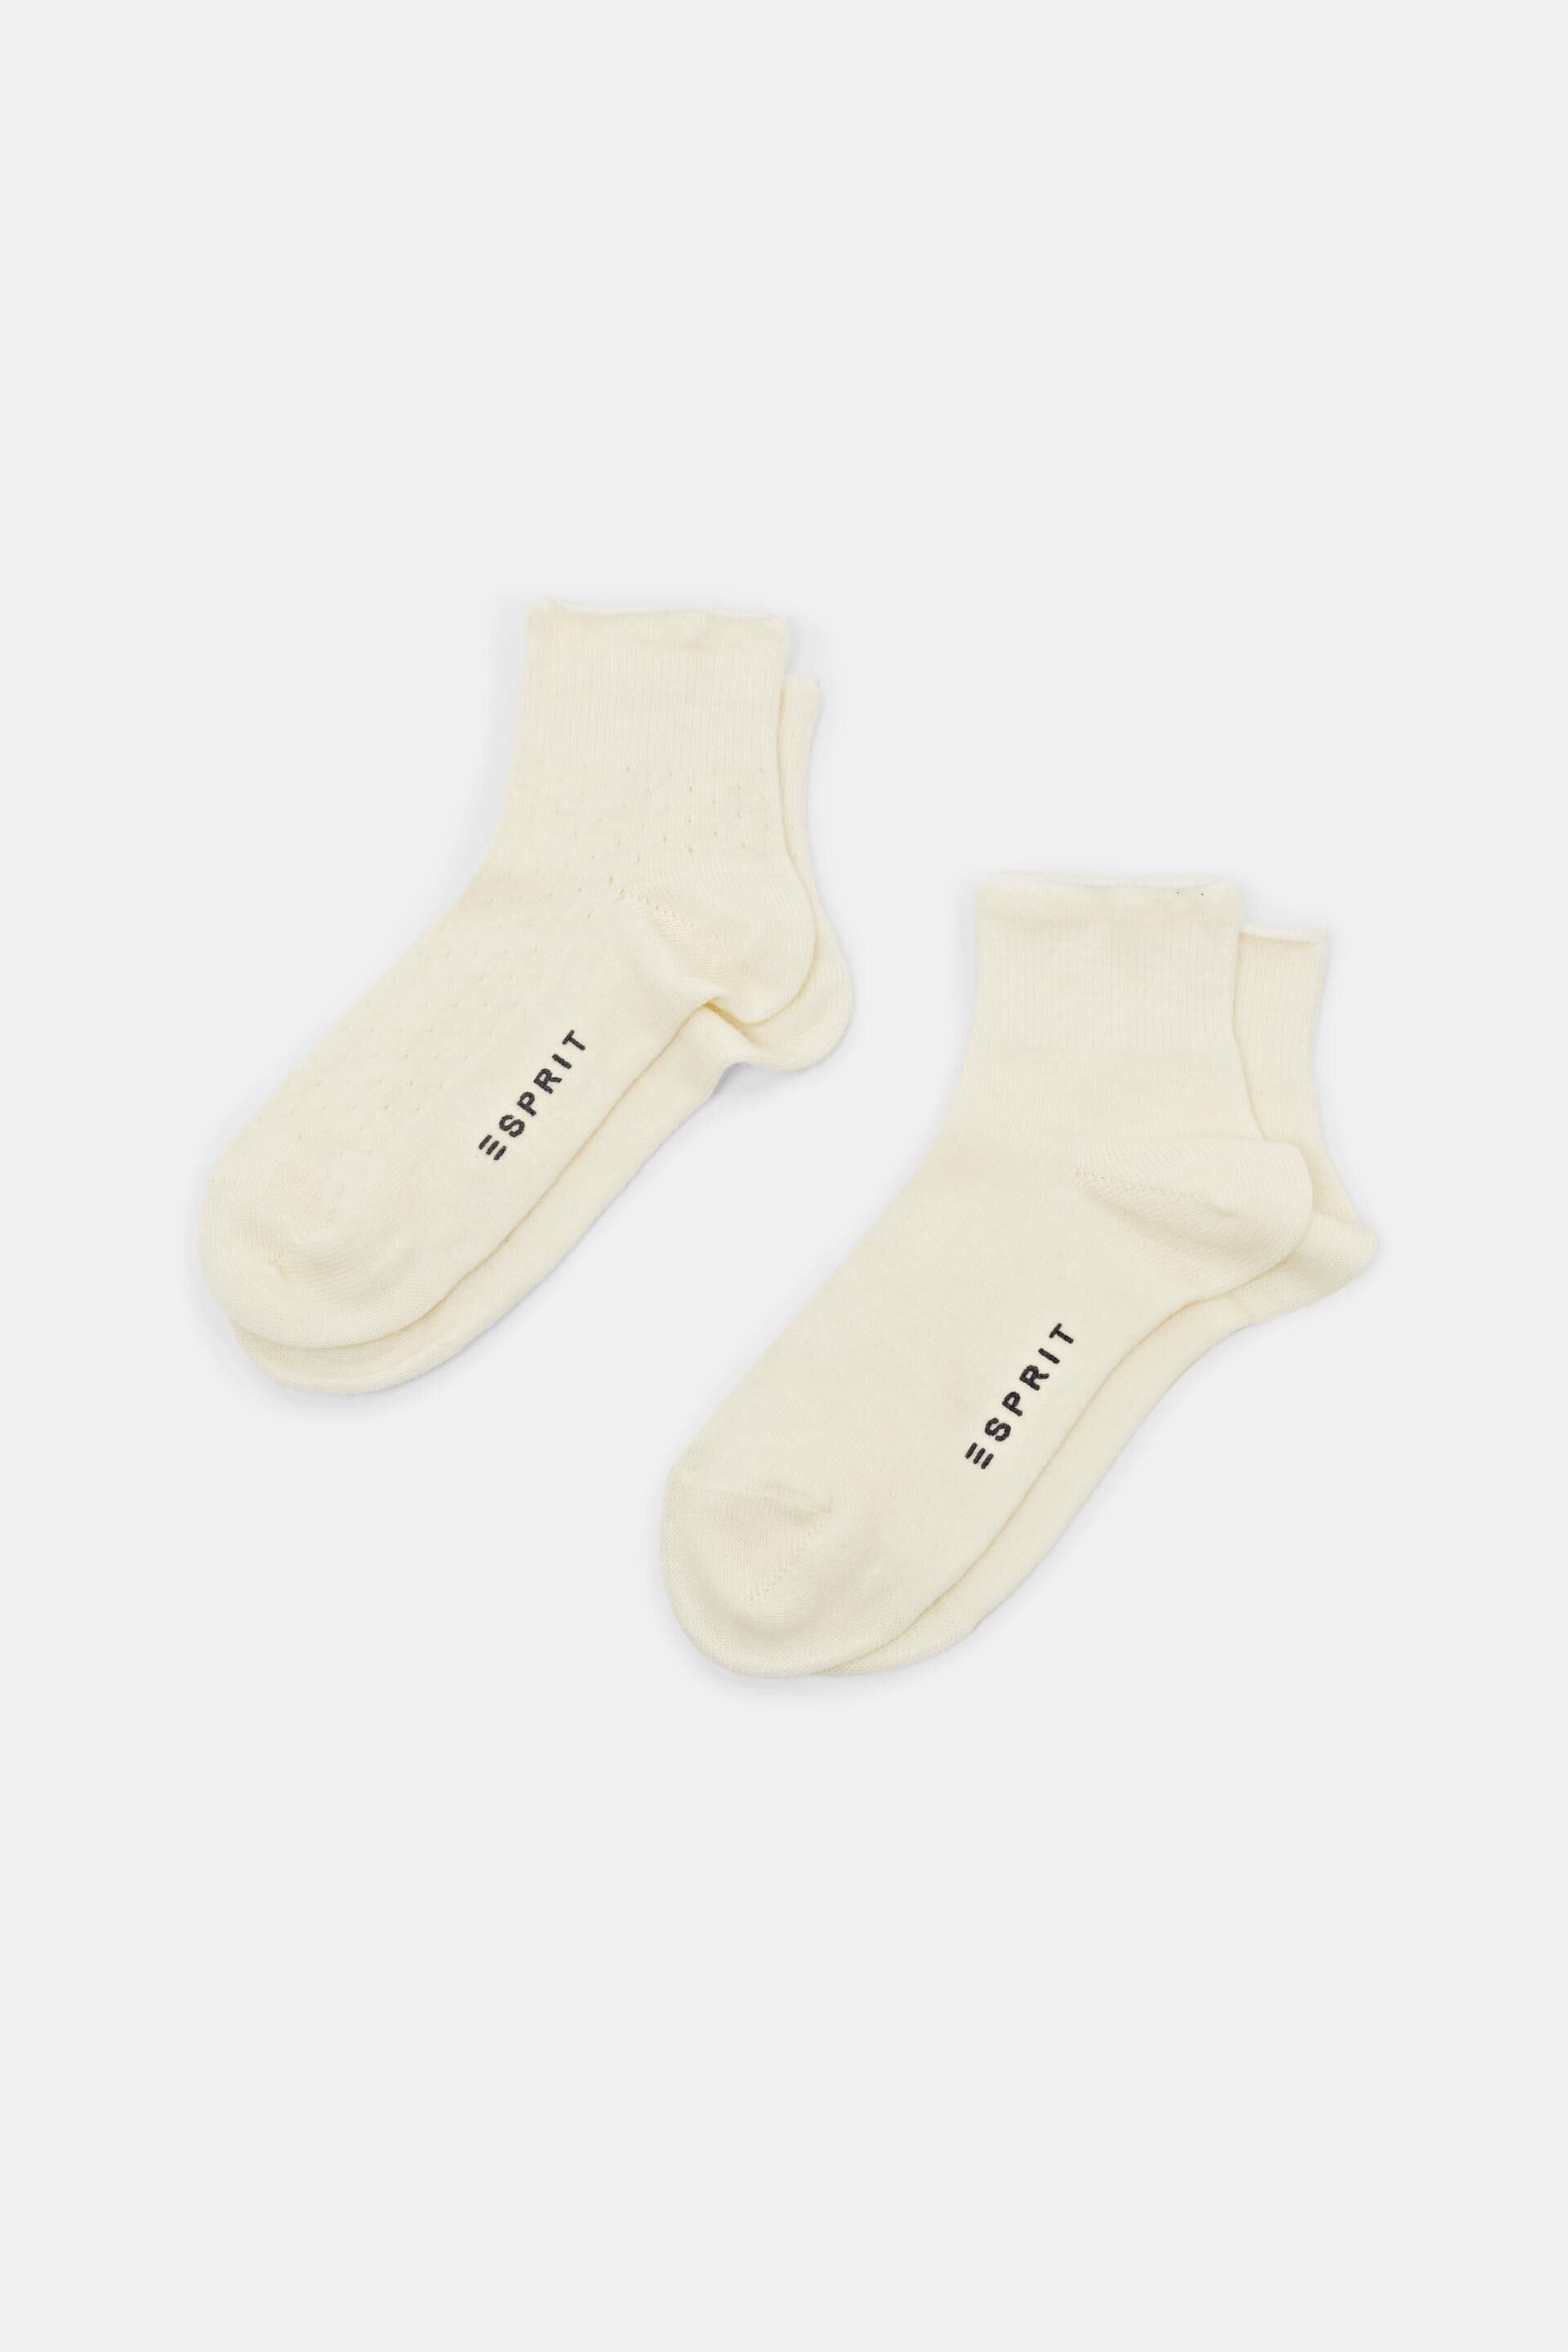 Esprit socks, pattern 2-pack wool lace blend of